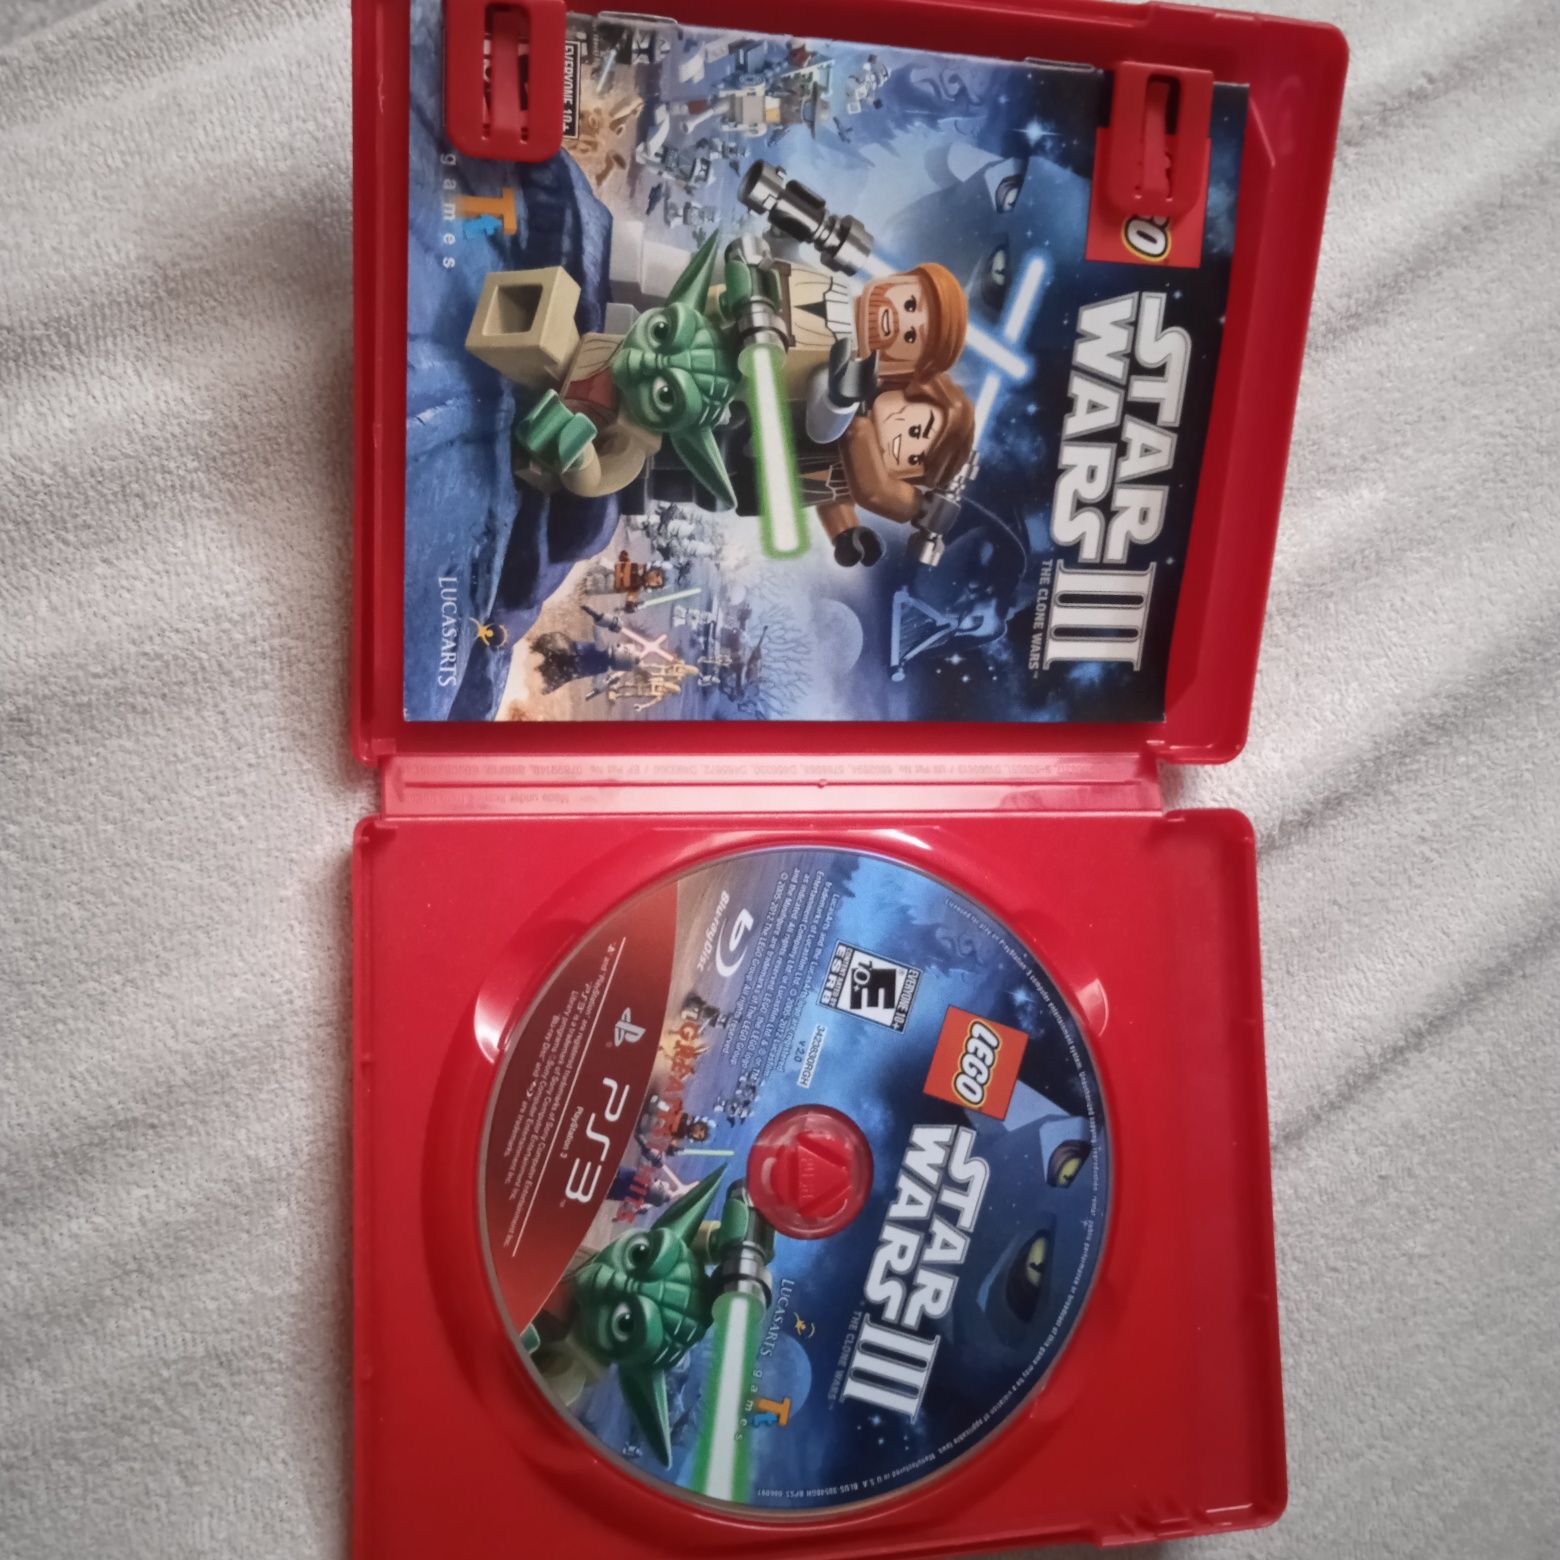 Ps3 LEGO Star Wars 3 III + FIFA 11 PS3 Gratis